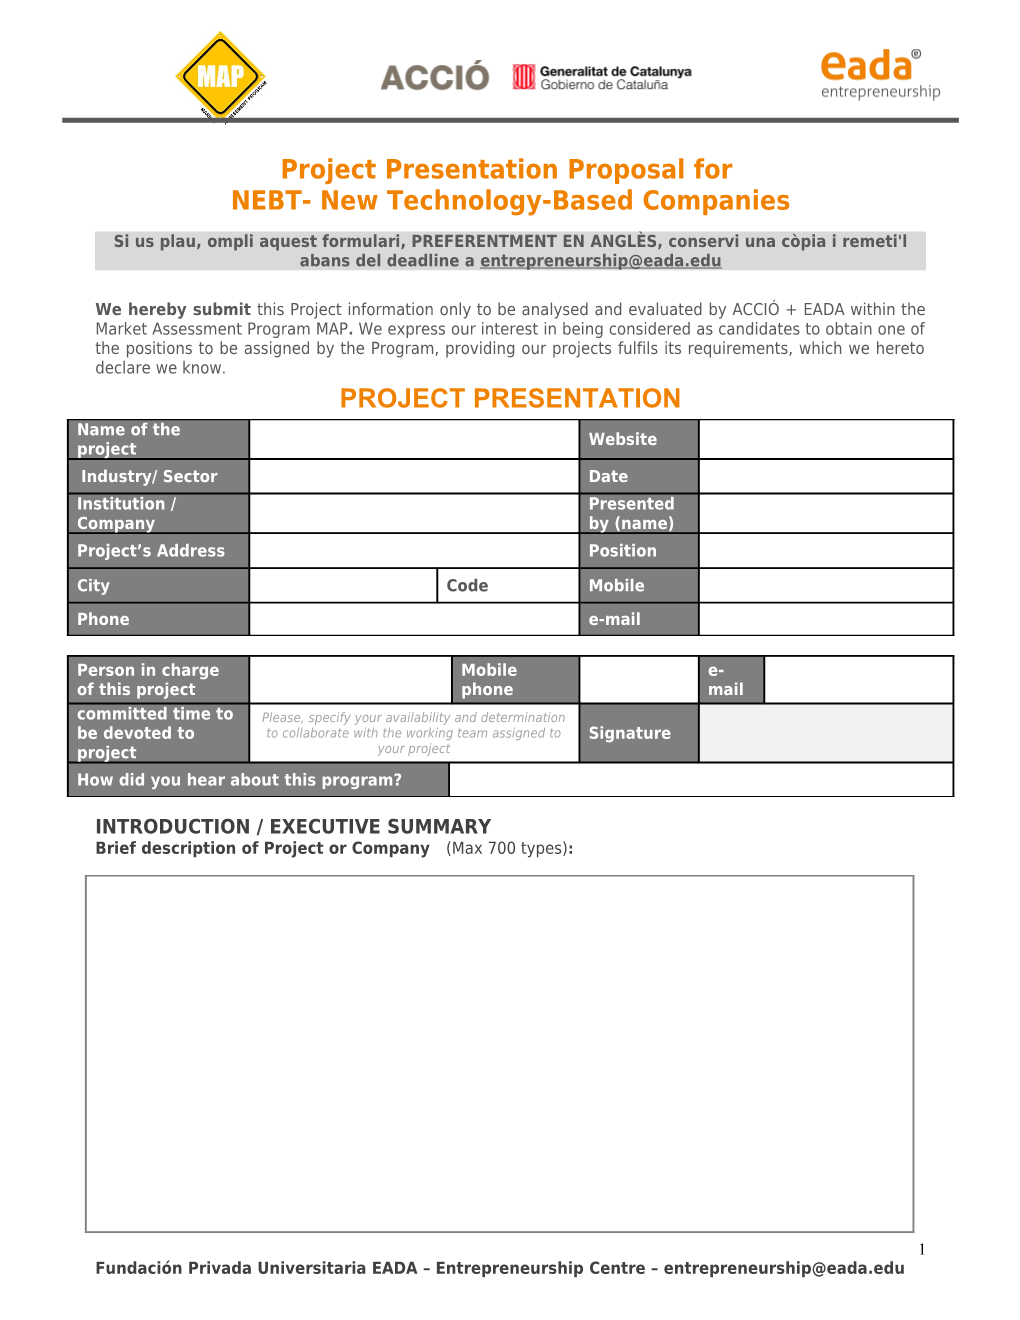 NEBT- New Technology-Based Companies